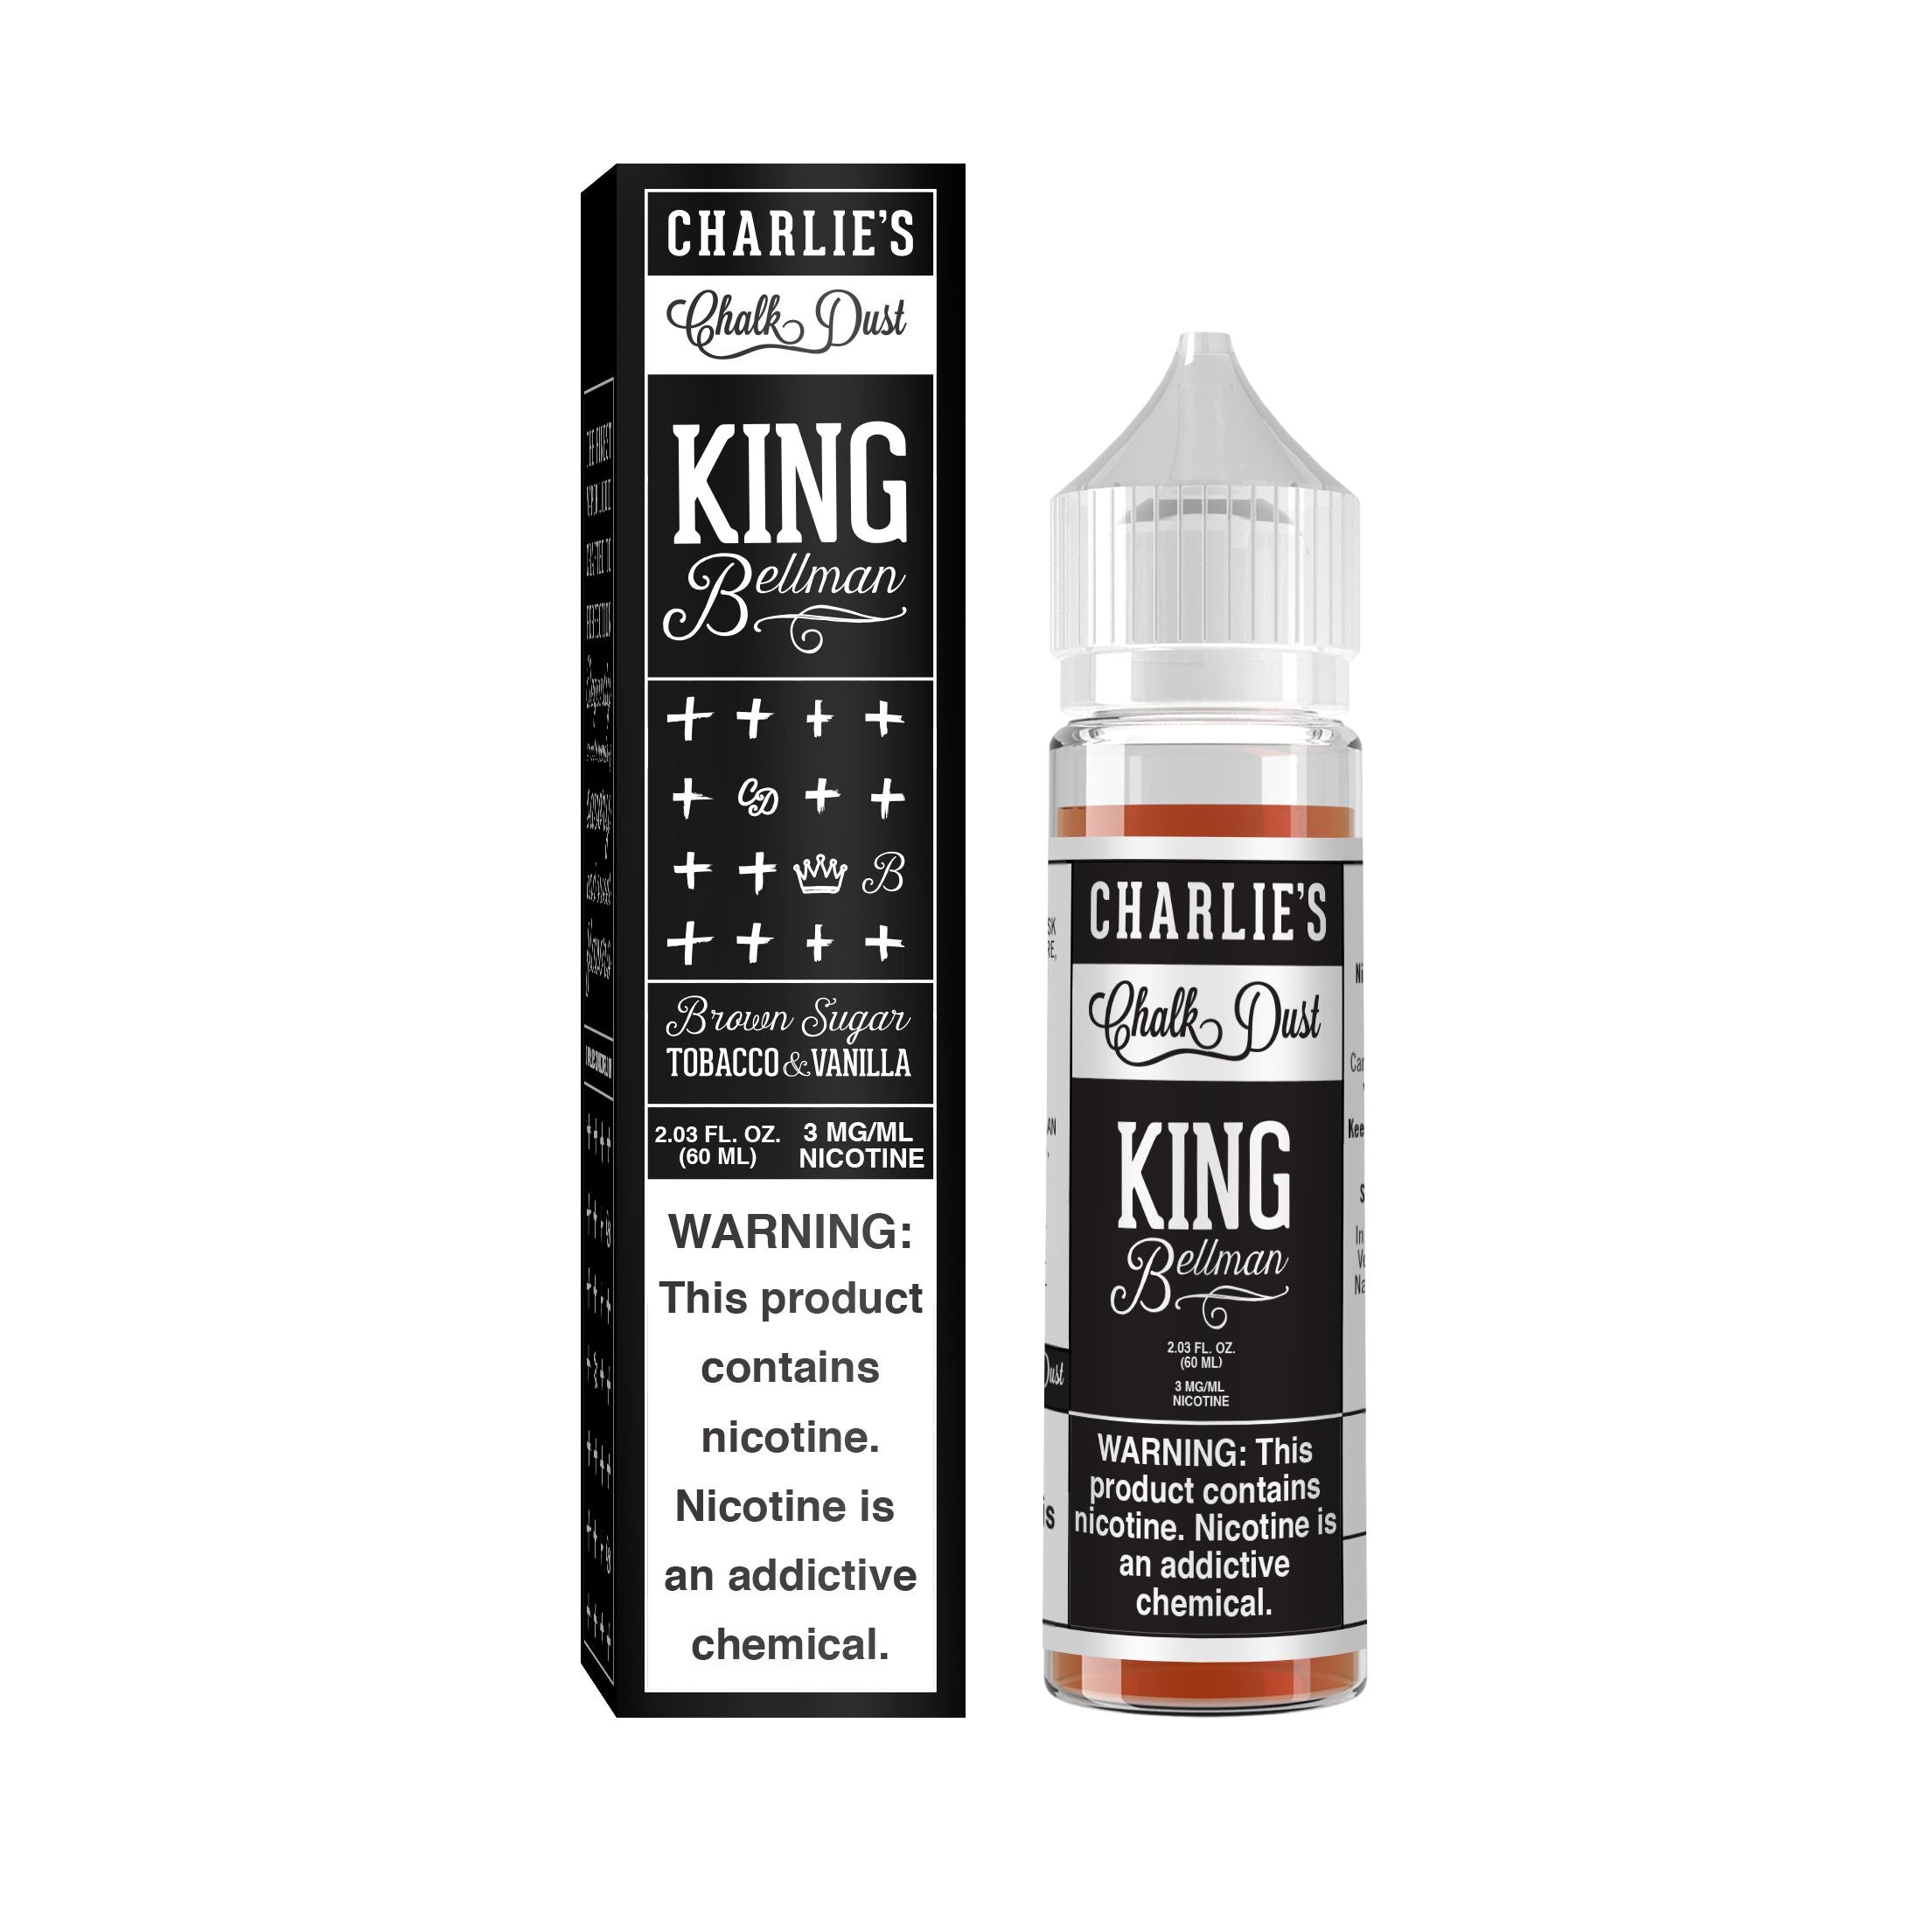 King Bellman Shortfill by Charlie's Chalk Dust. - 50ml-Supergood.